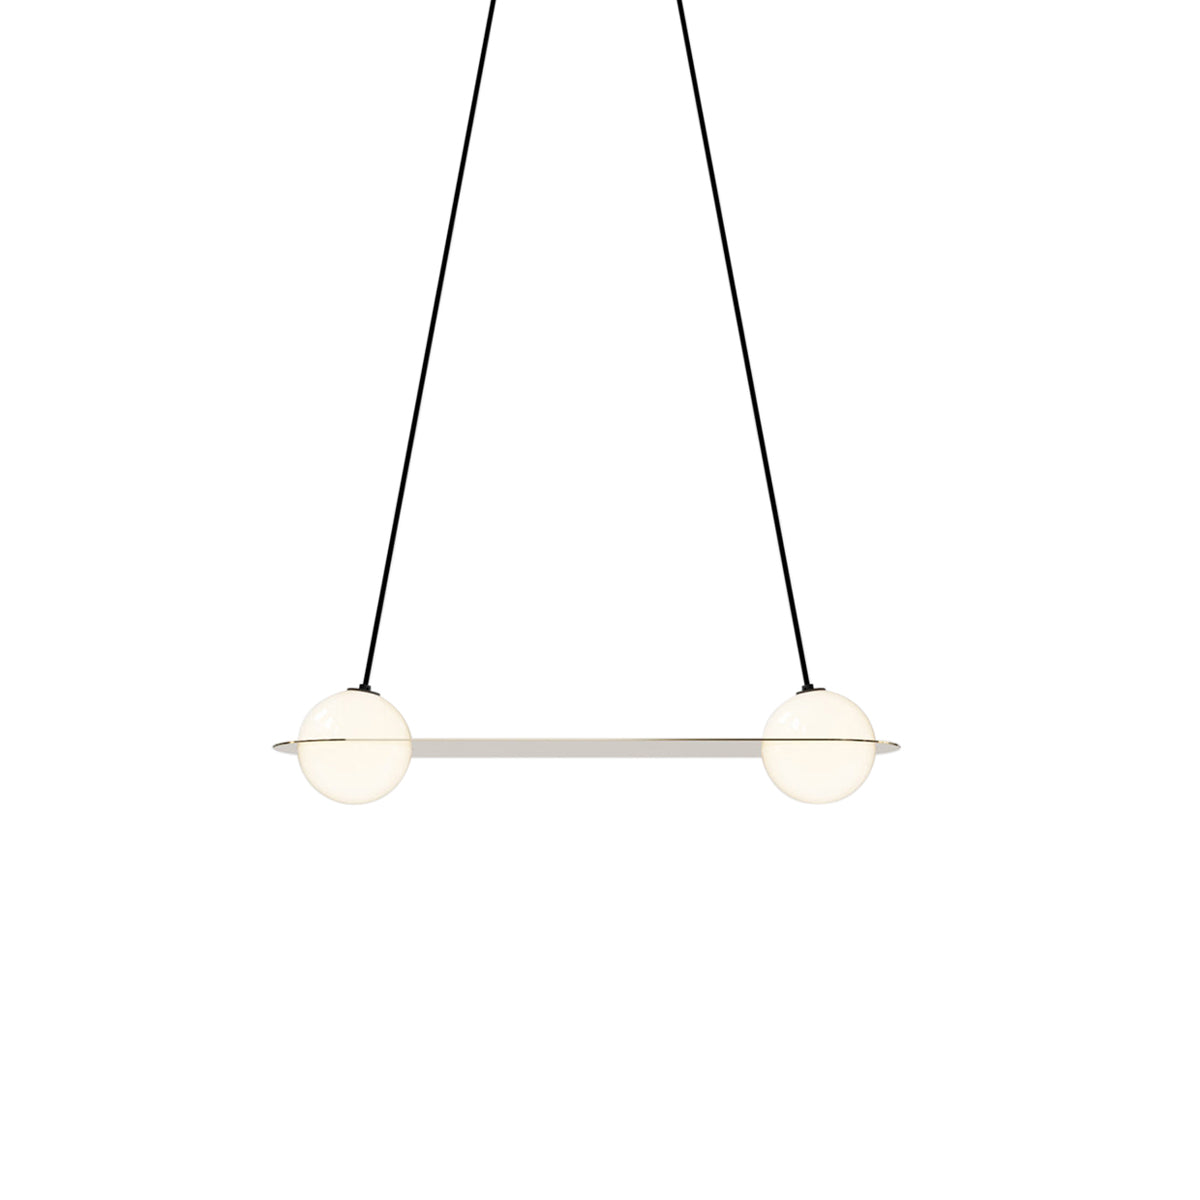 Laurent 03 Suspension Lamp: Brass + Black + Angled Wires